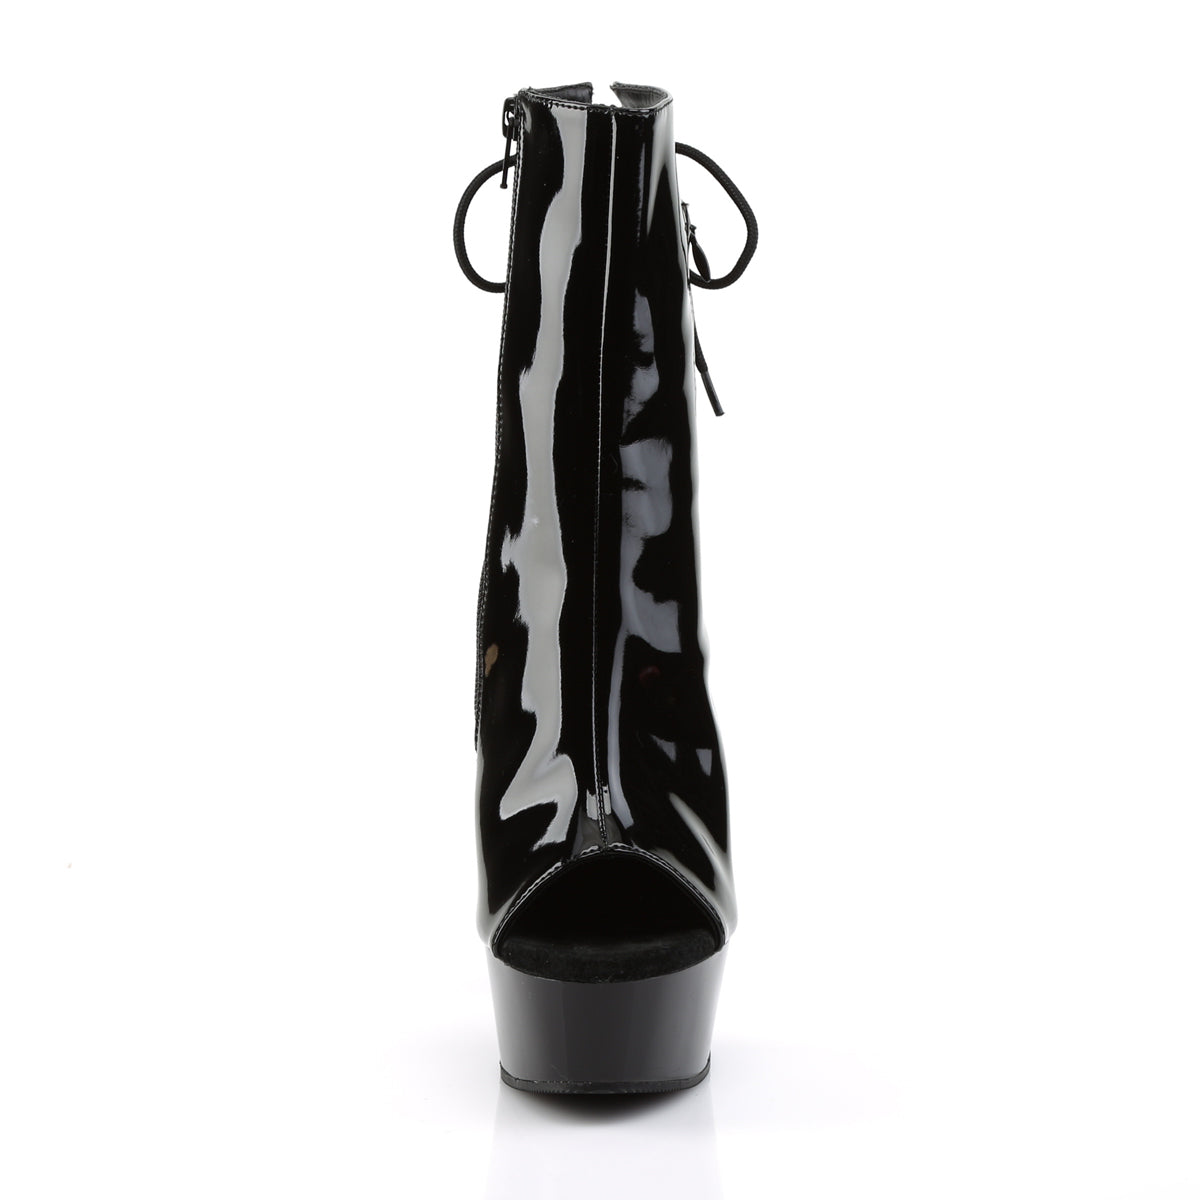 DELIGHT-1018 6 Inch Heel Black Patent Pole Dancing Platforms-Pleaser- Sexy Shoes Alternative Footwear